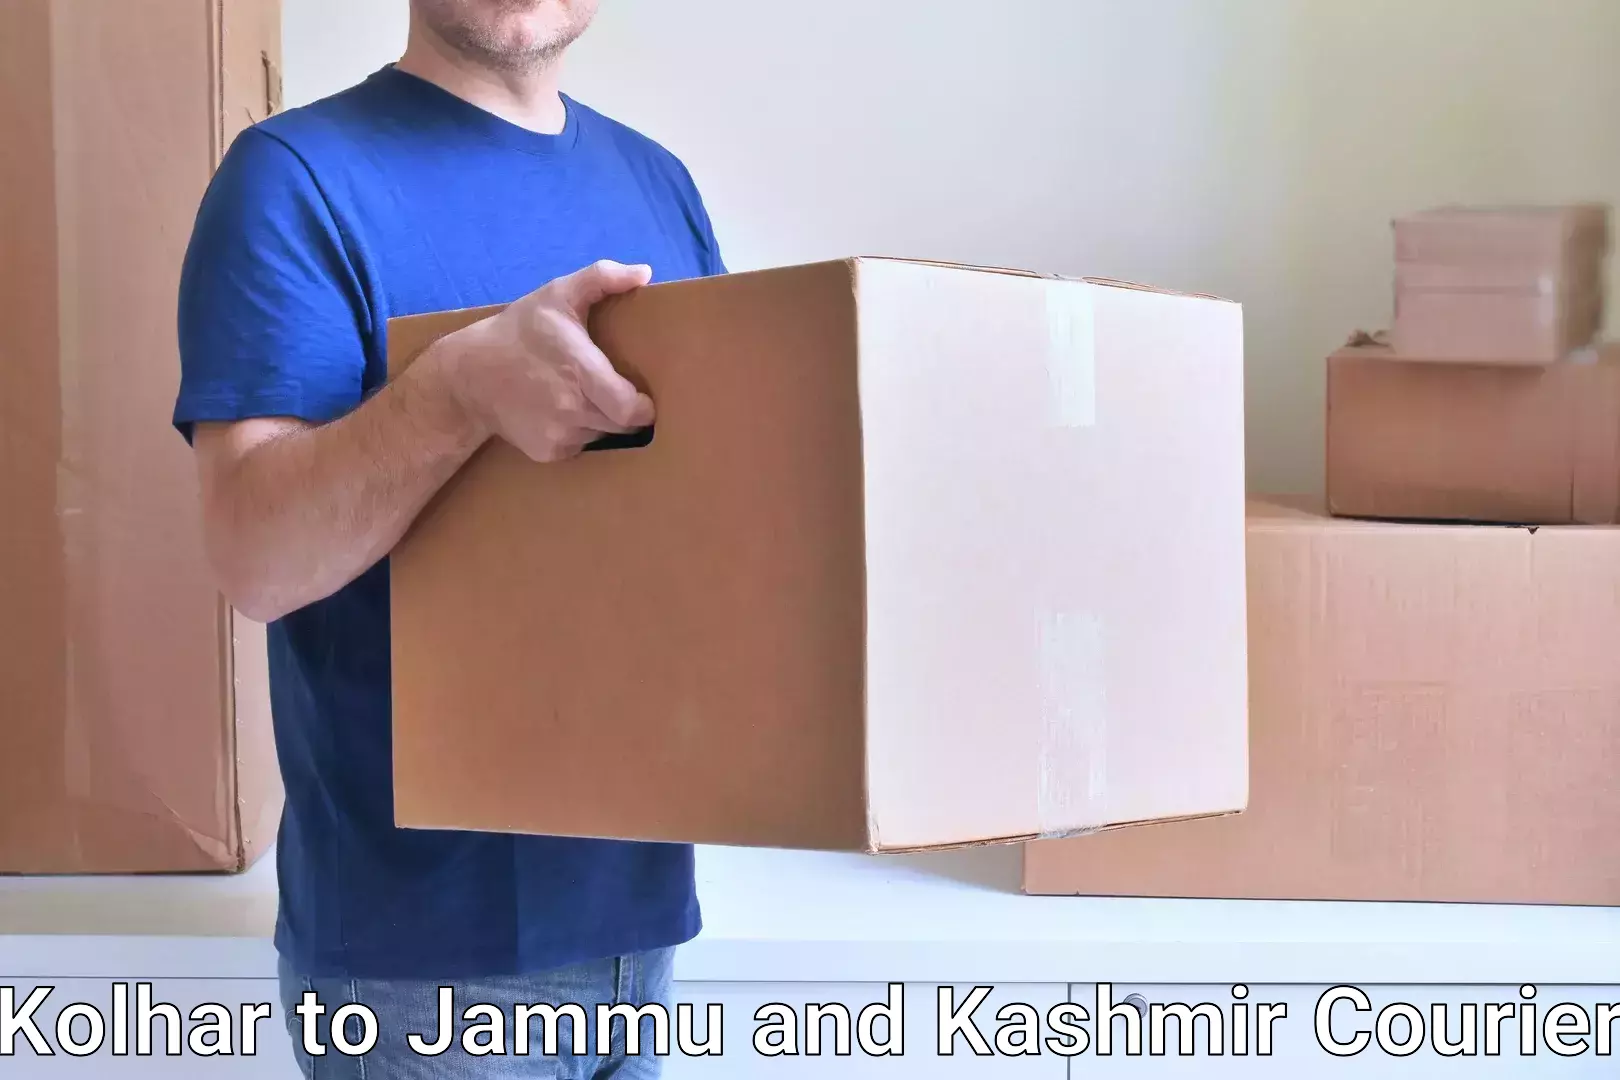 24-hour courier service Kolhar to Srinagar Kashmir